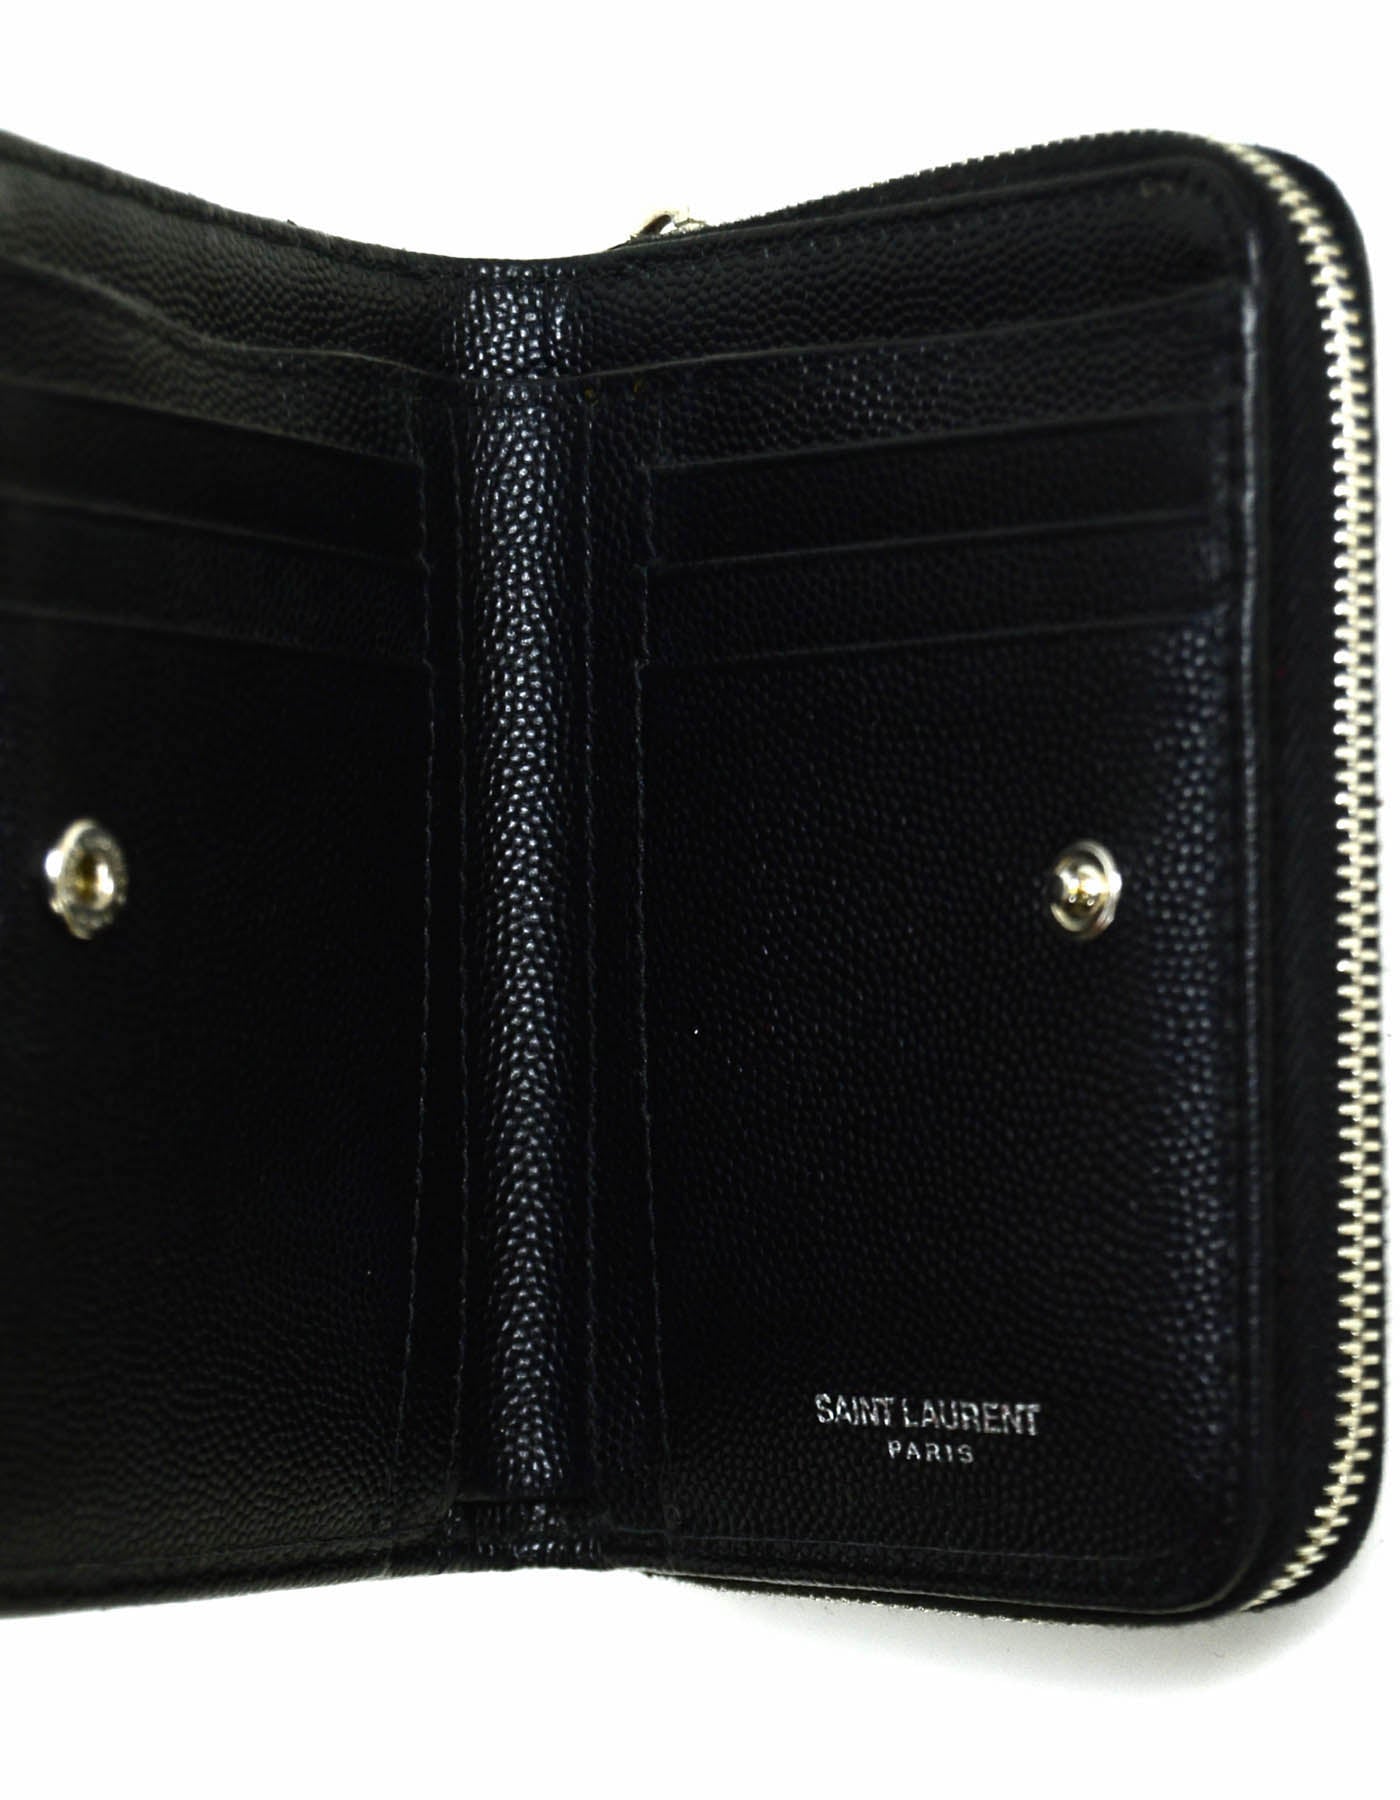 Saint Laurent Monogram Chevron Leather Compact Zip Around Wallet